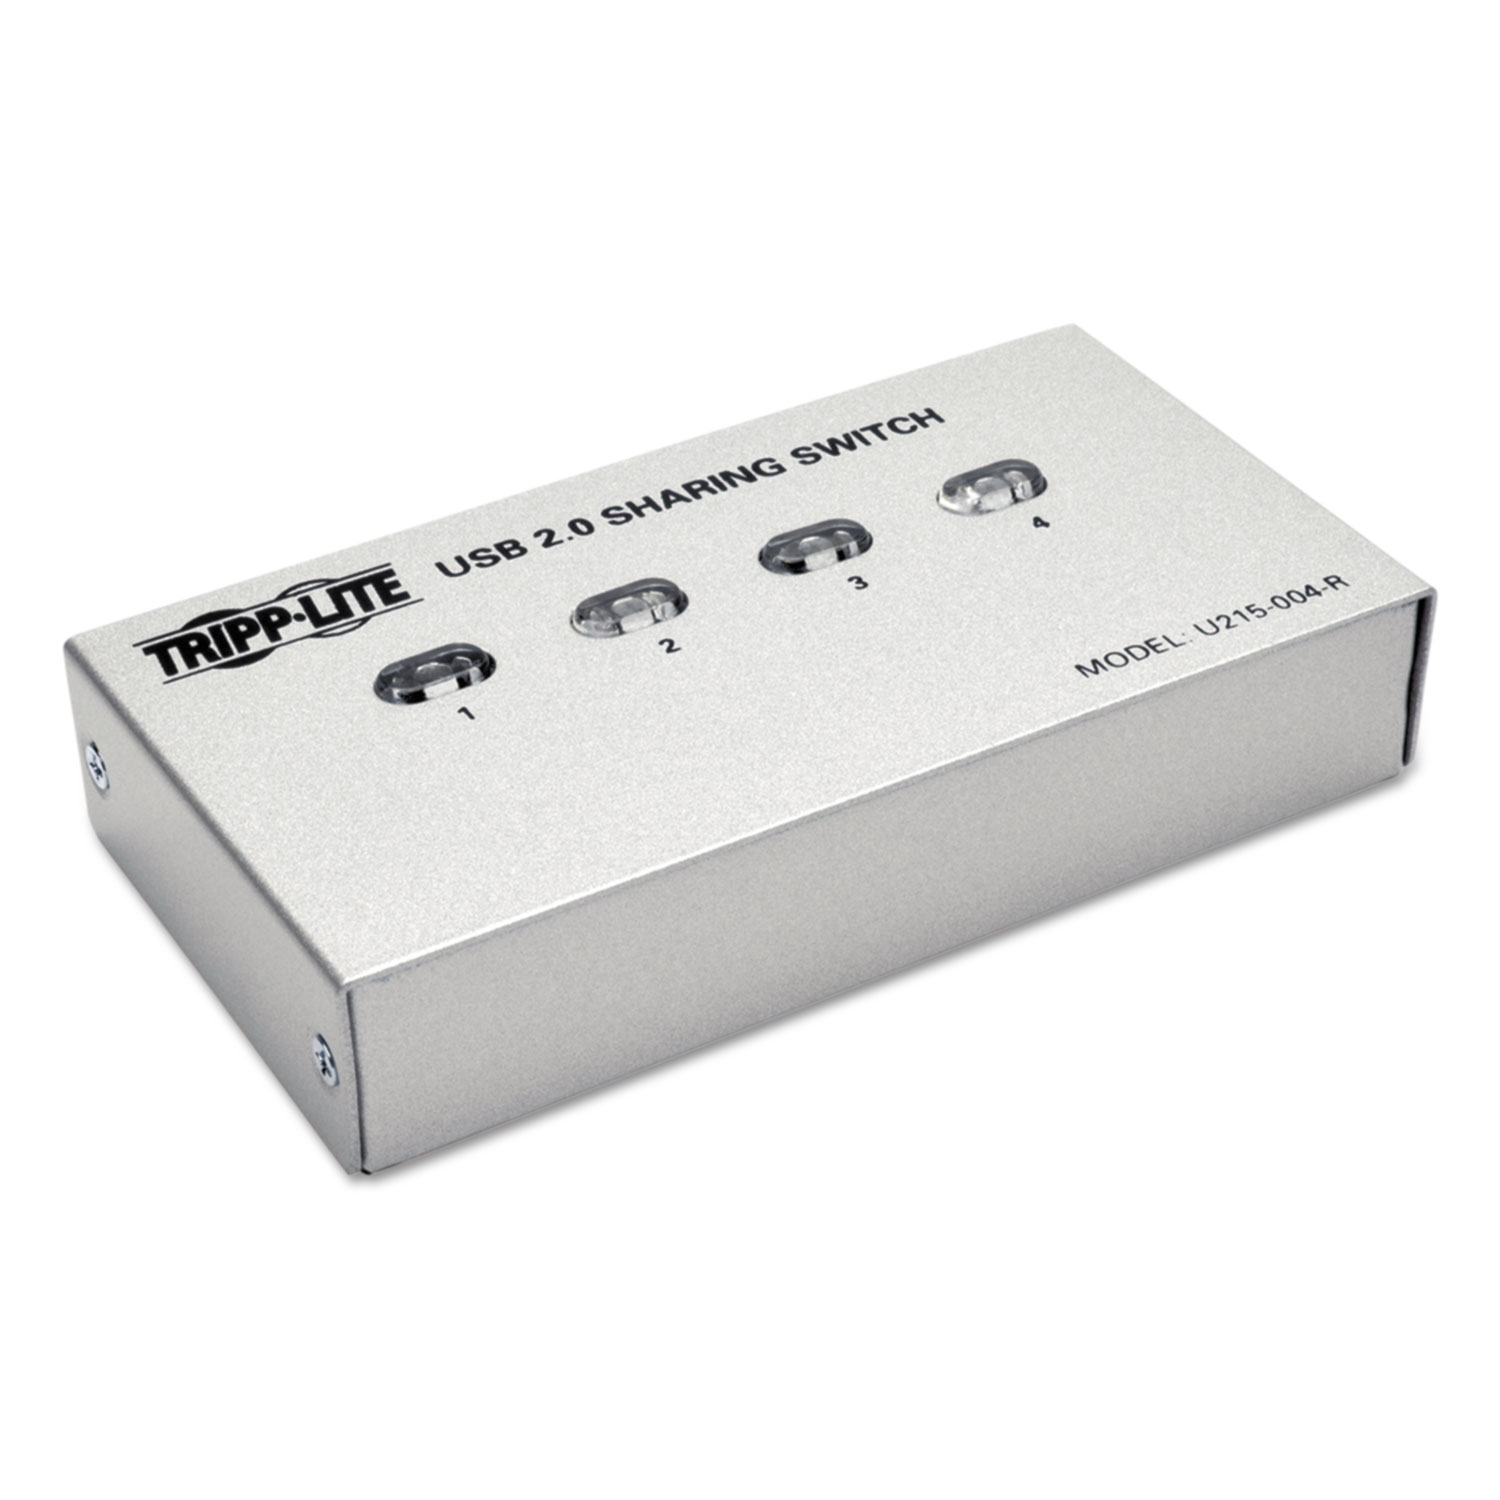 U215-004-R 4-Port USB 2.0 Printer Peripheral Sharing Switch